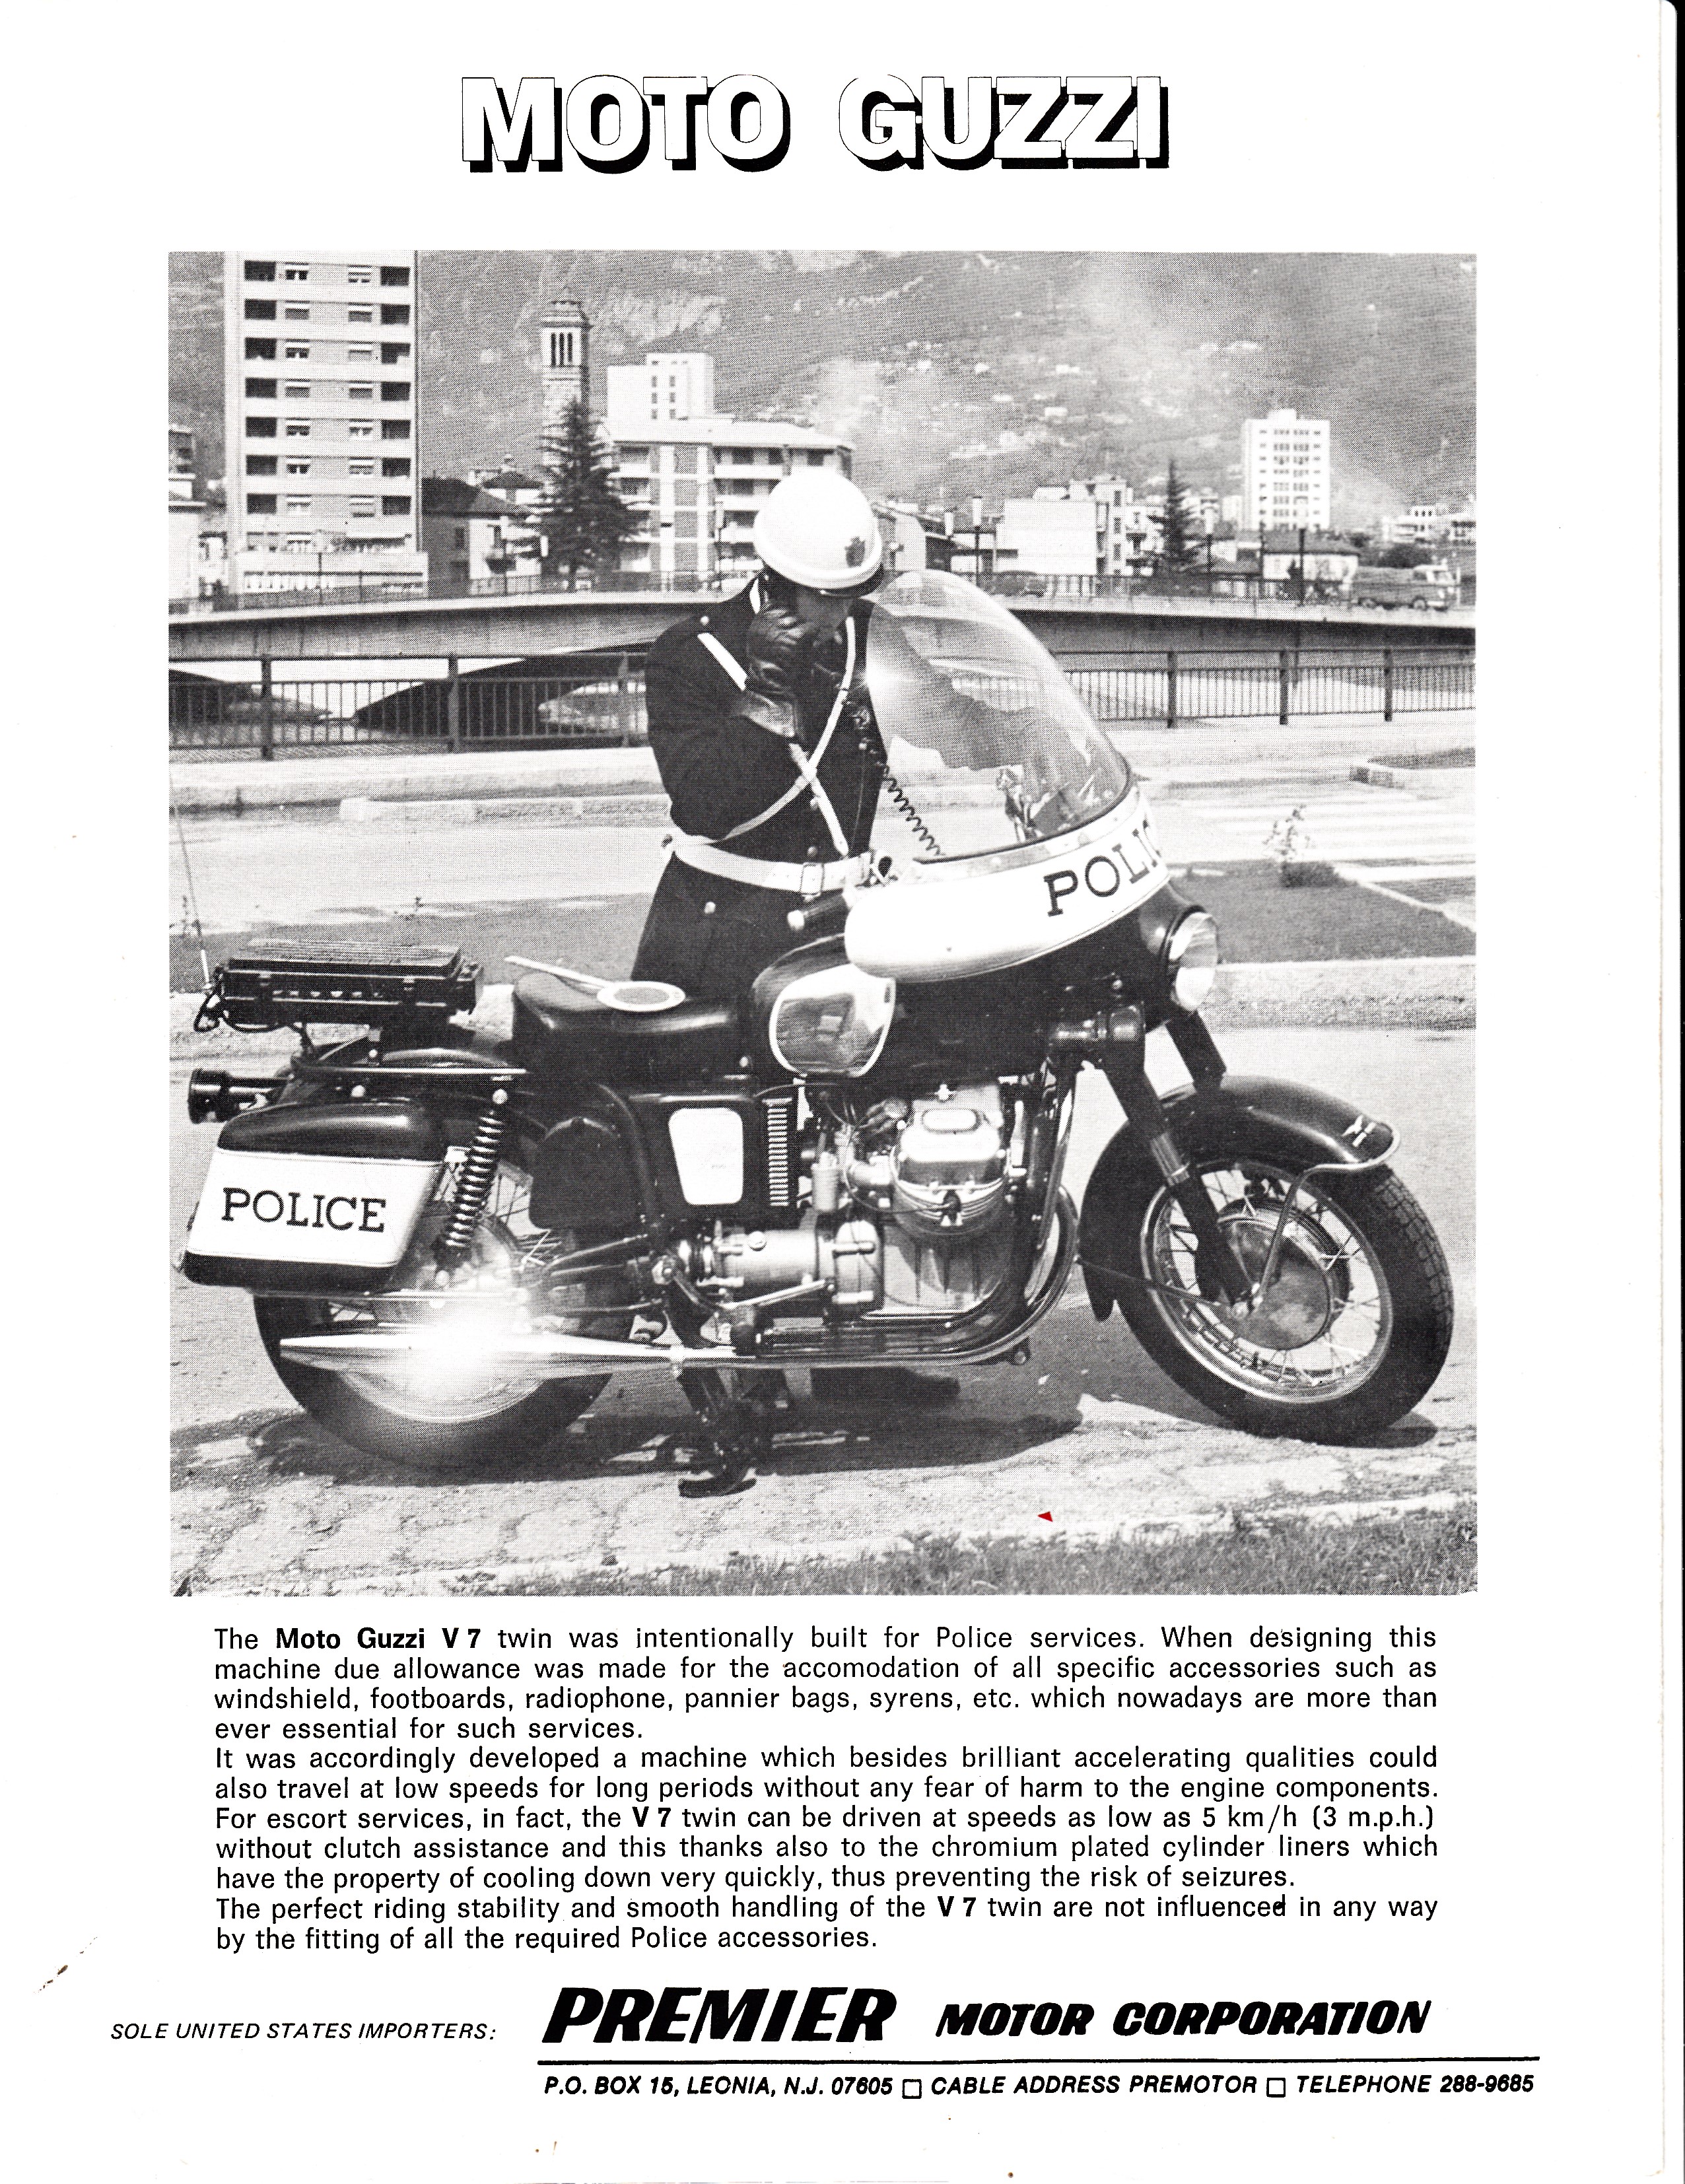 Moto Guzzi V700 factory brochure of magazine reviews, Page 8 of 8.